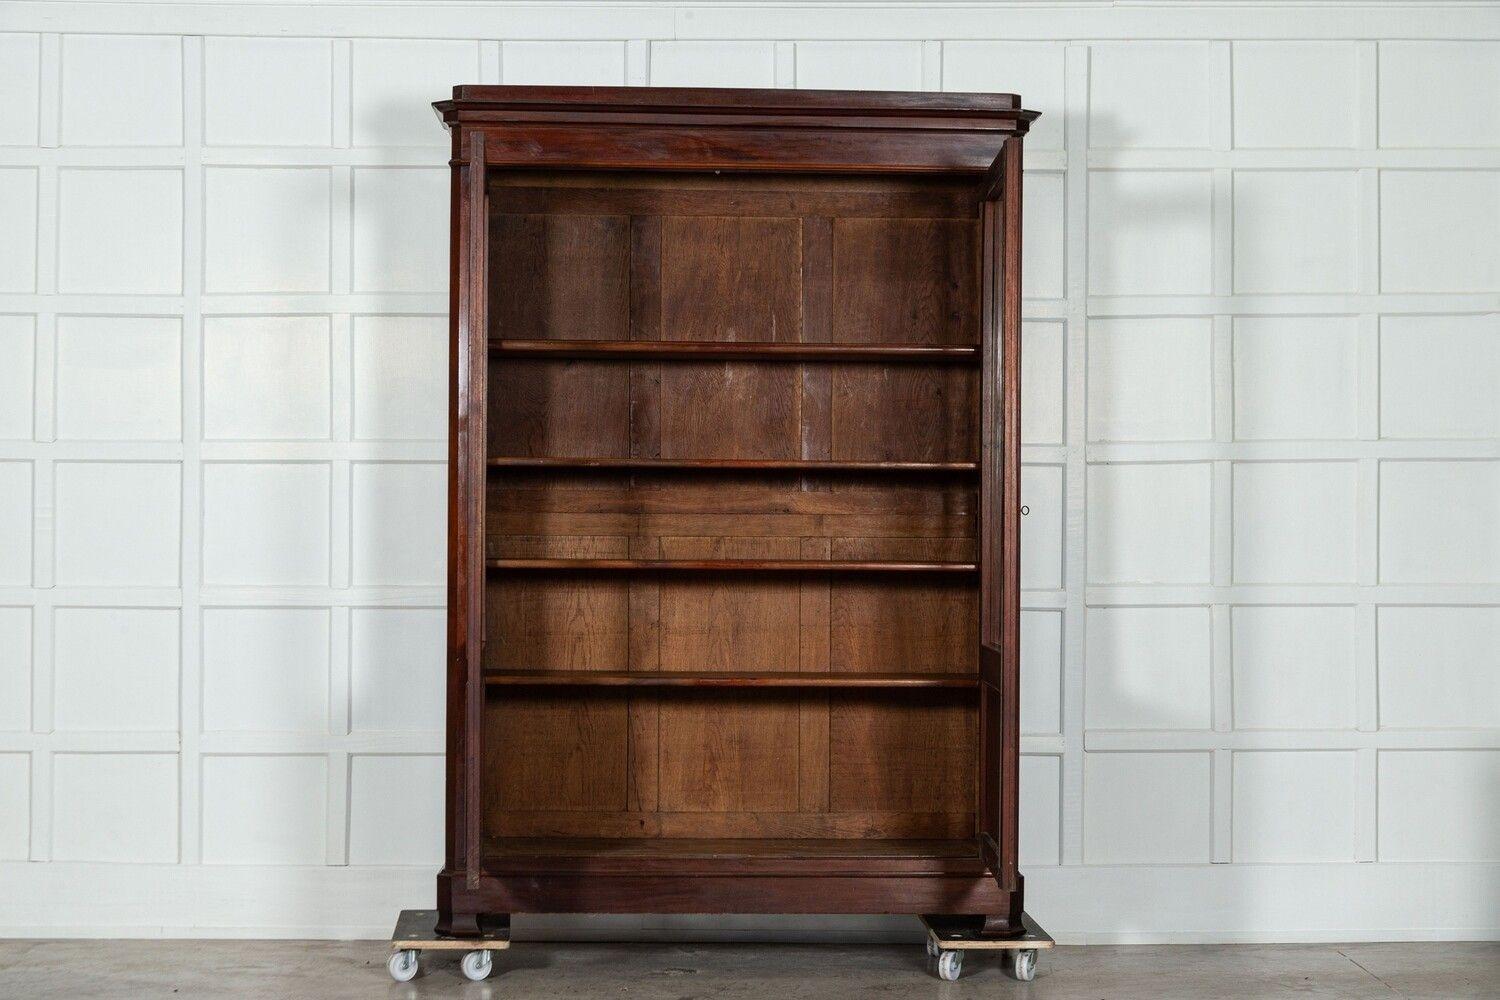 circa 1870
Large 19thC English Glazed Mahogany & Oak Bookcase / Vitrine
sku 1577
W154 x D48 x H215 cm